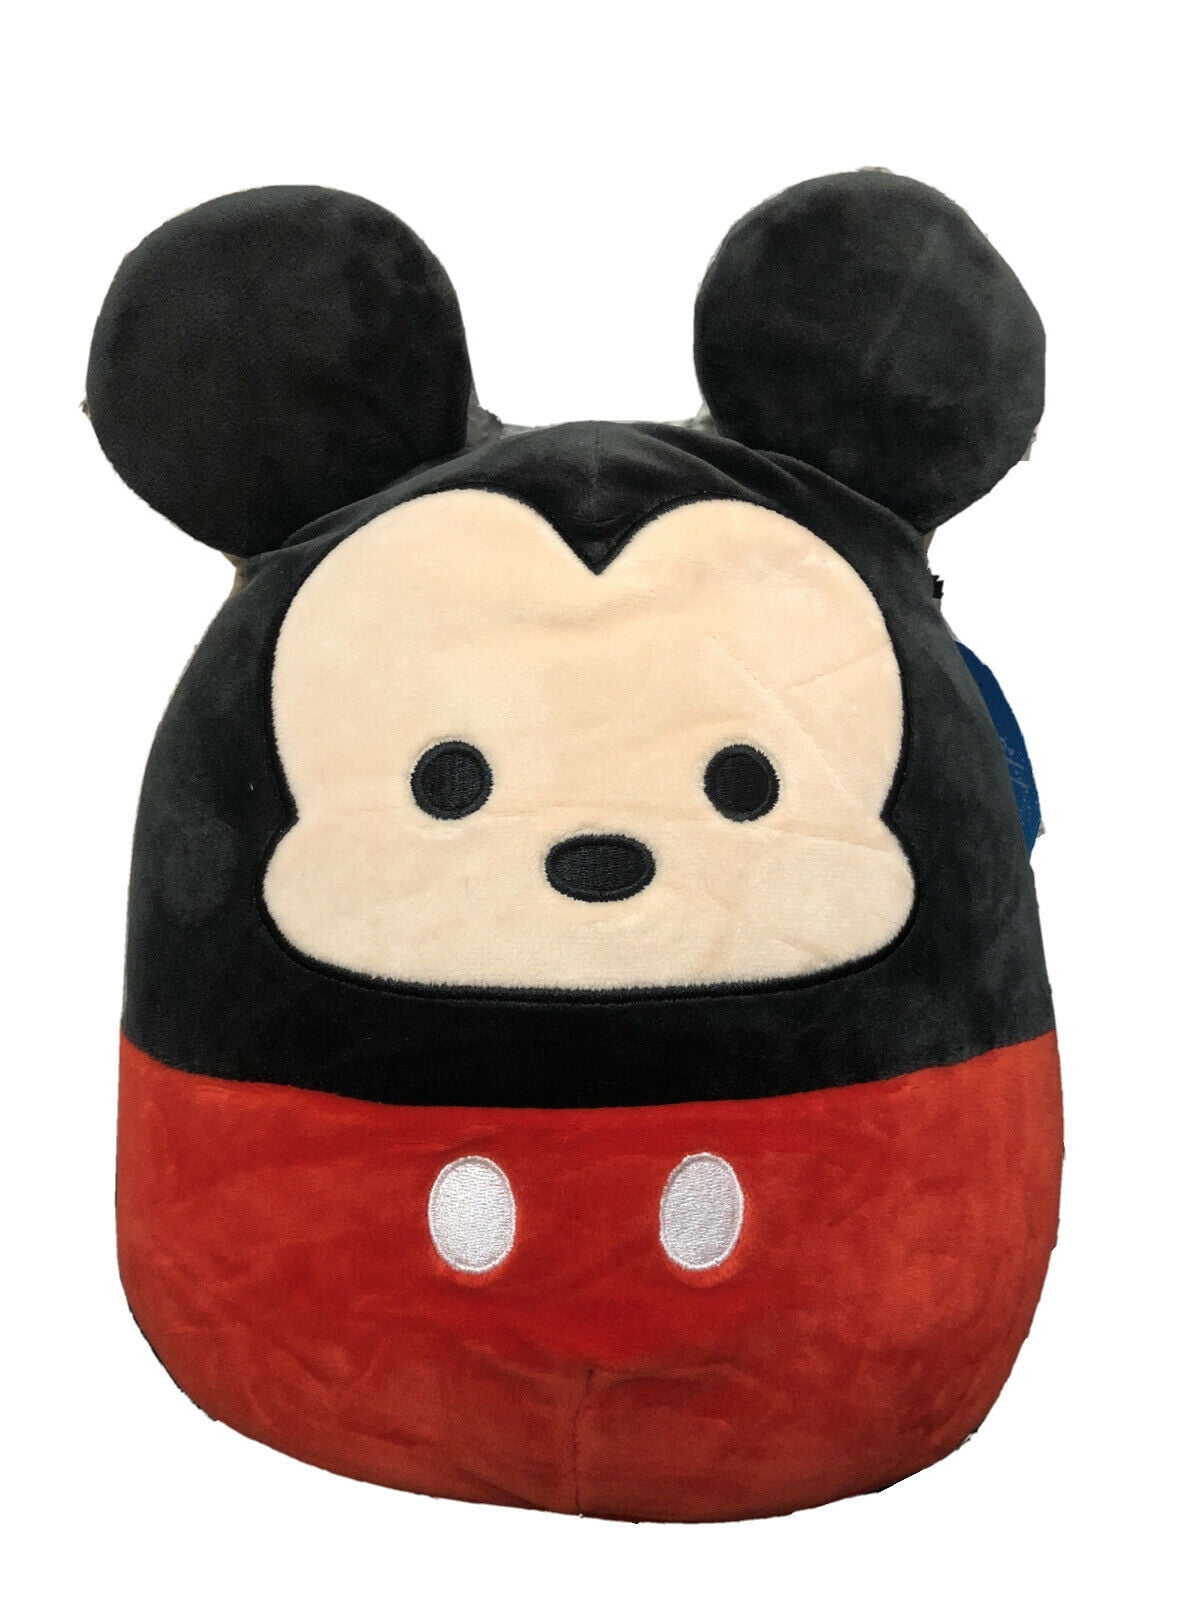 Disney 12" Mickey Mouse Plush Stuffed Animal Doll 